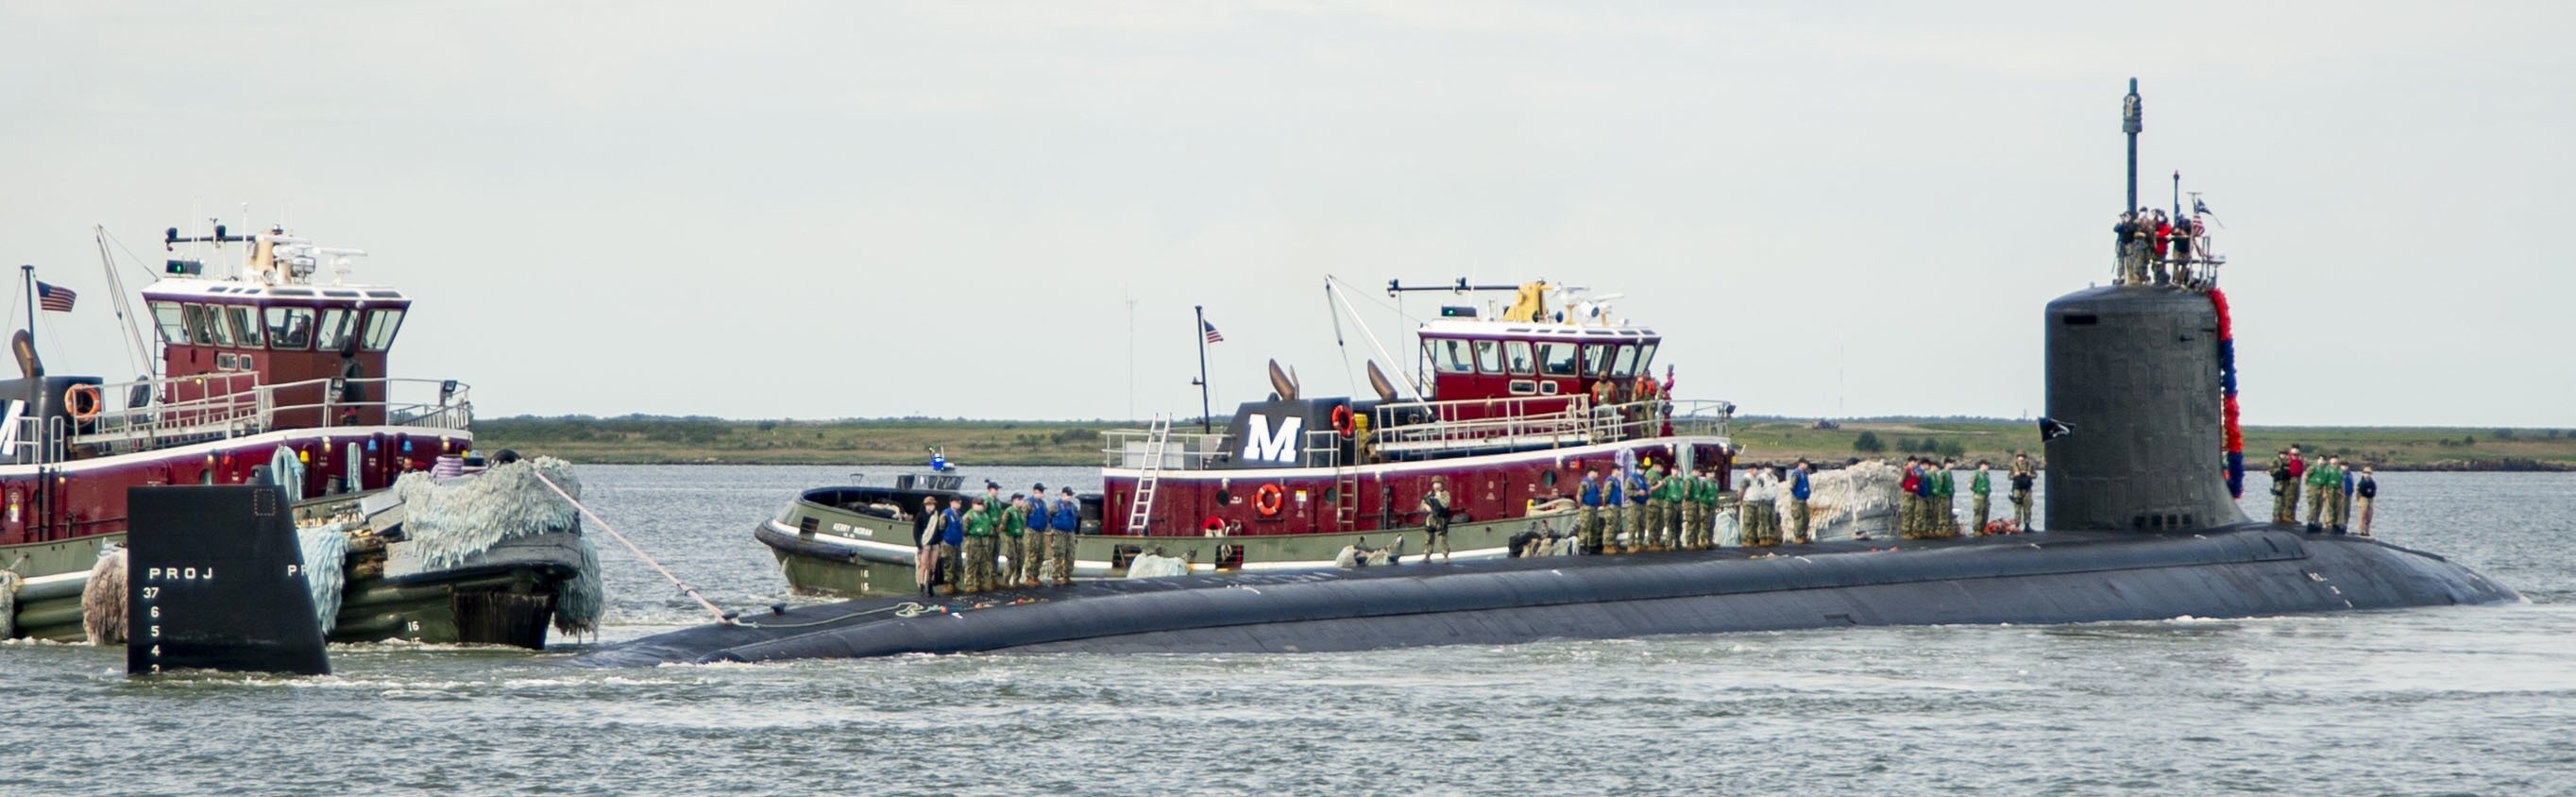 ssn-778 uss new hampshire virginia class attack submarine us navy 37 norfolk virginia